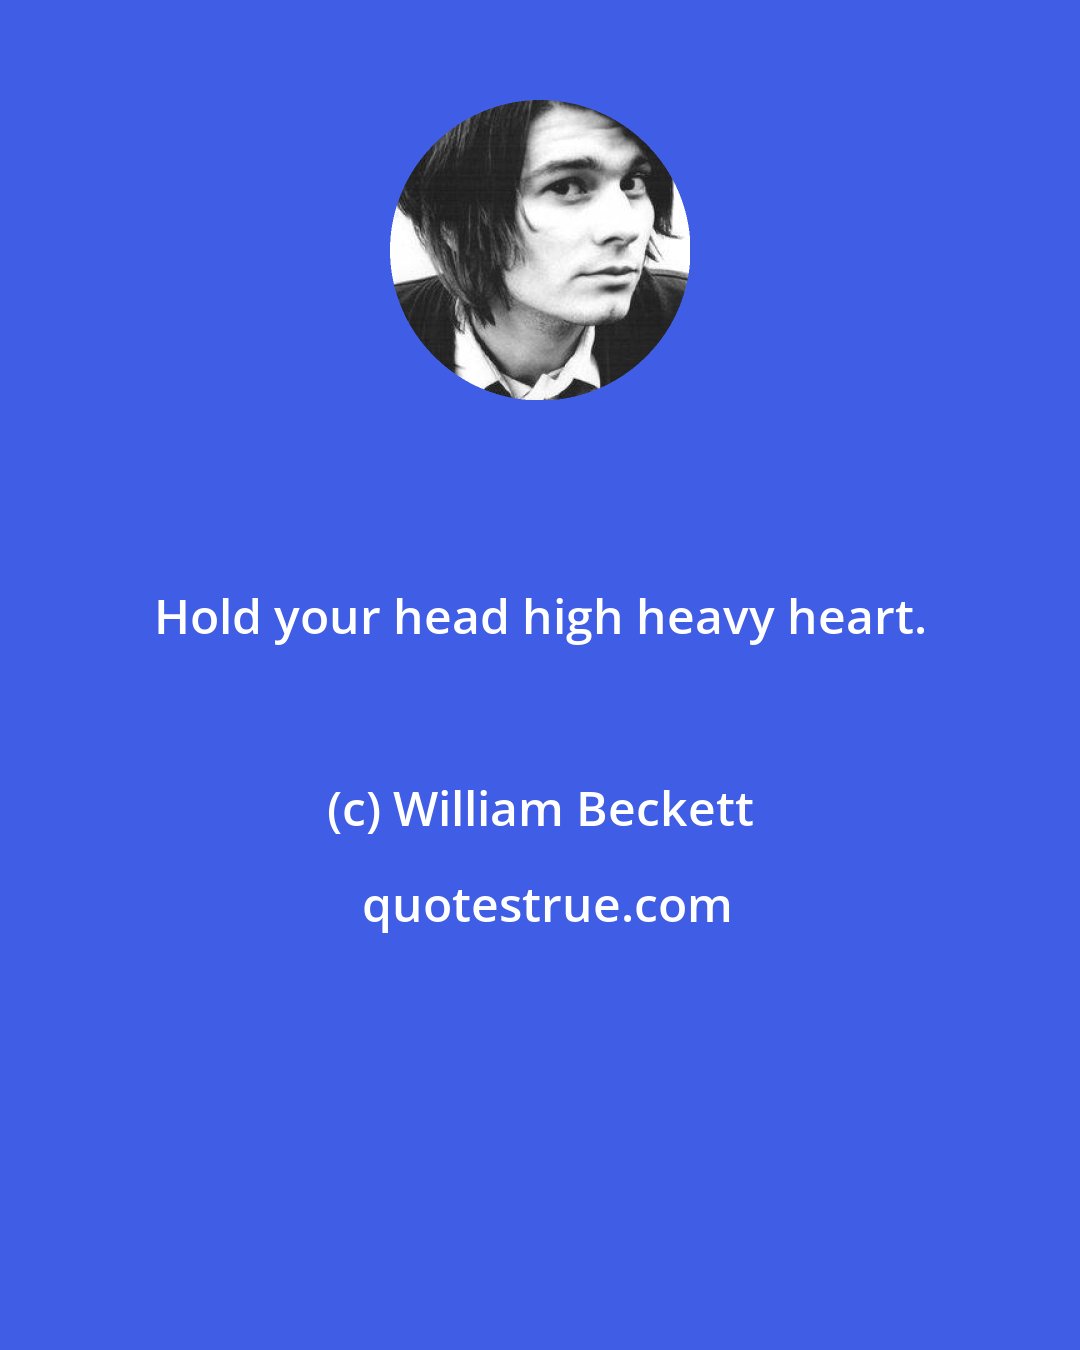 William Beckett: Hold your head high heavy heart.